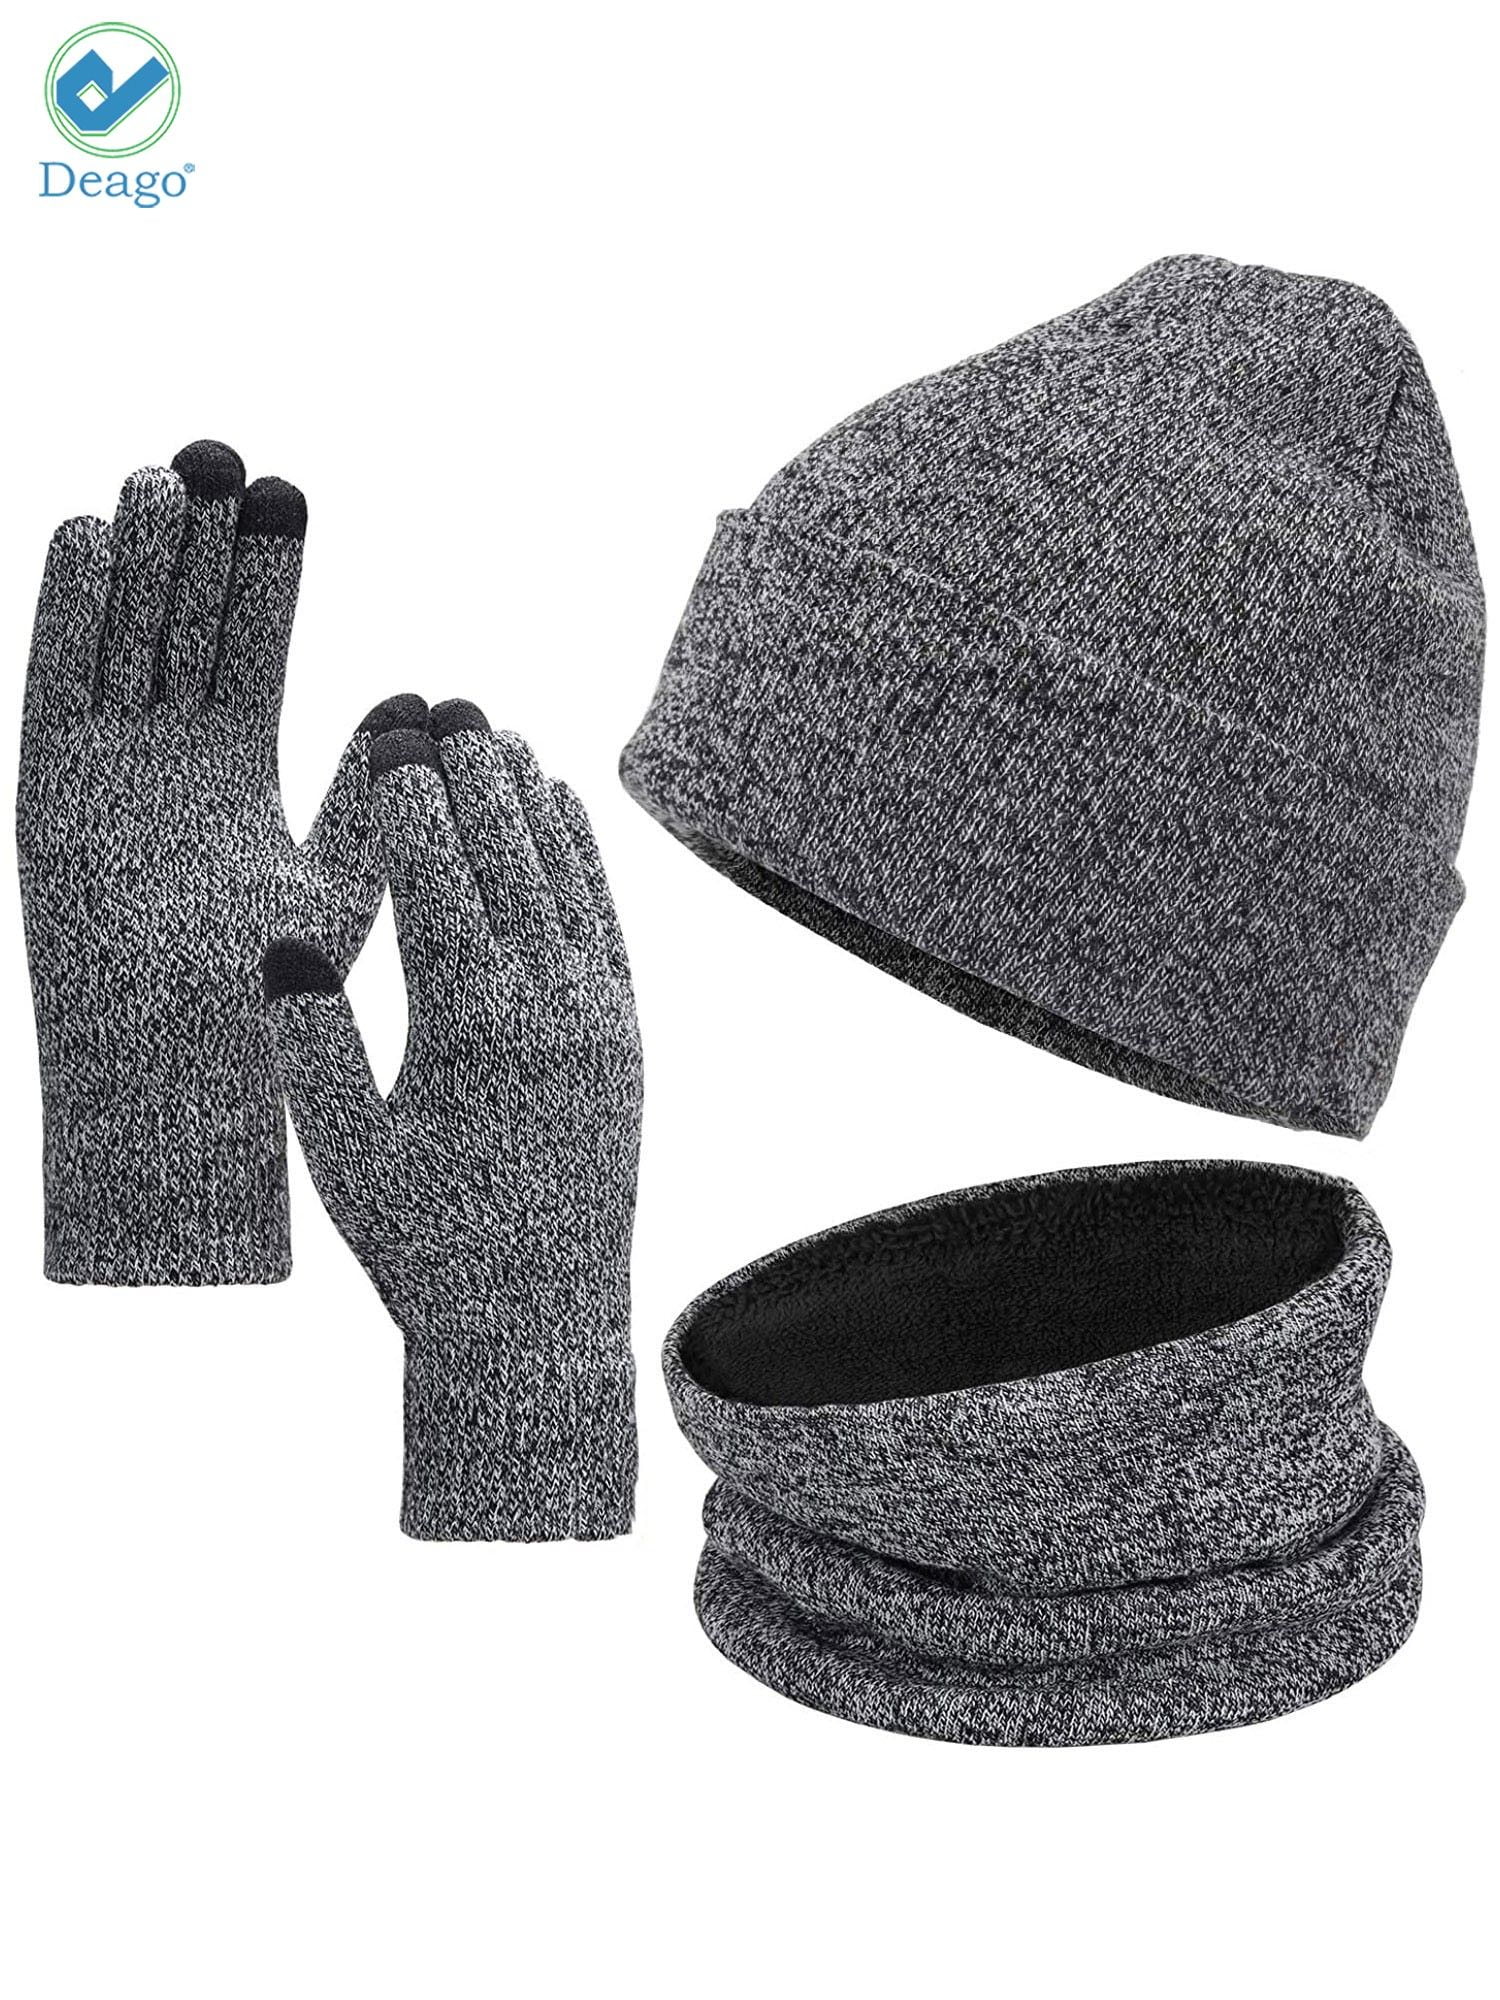 Deago Winter Beanie Hat Scarf Touchscreen Gloves Set for Men and Women ...